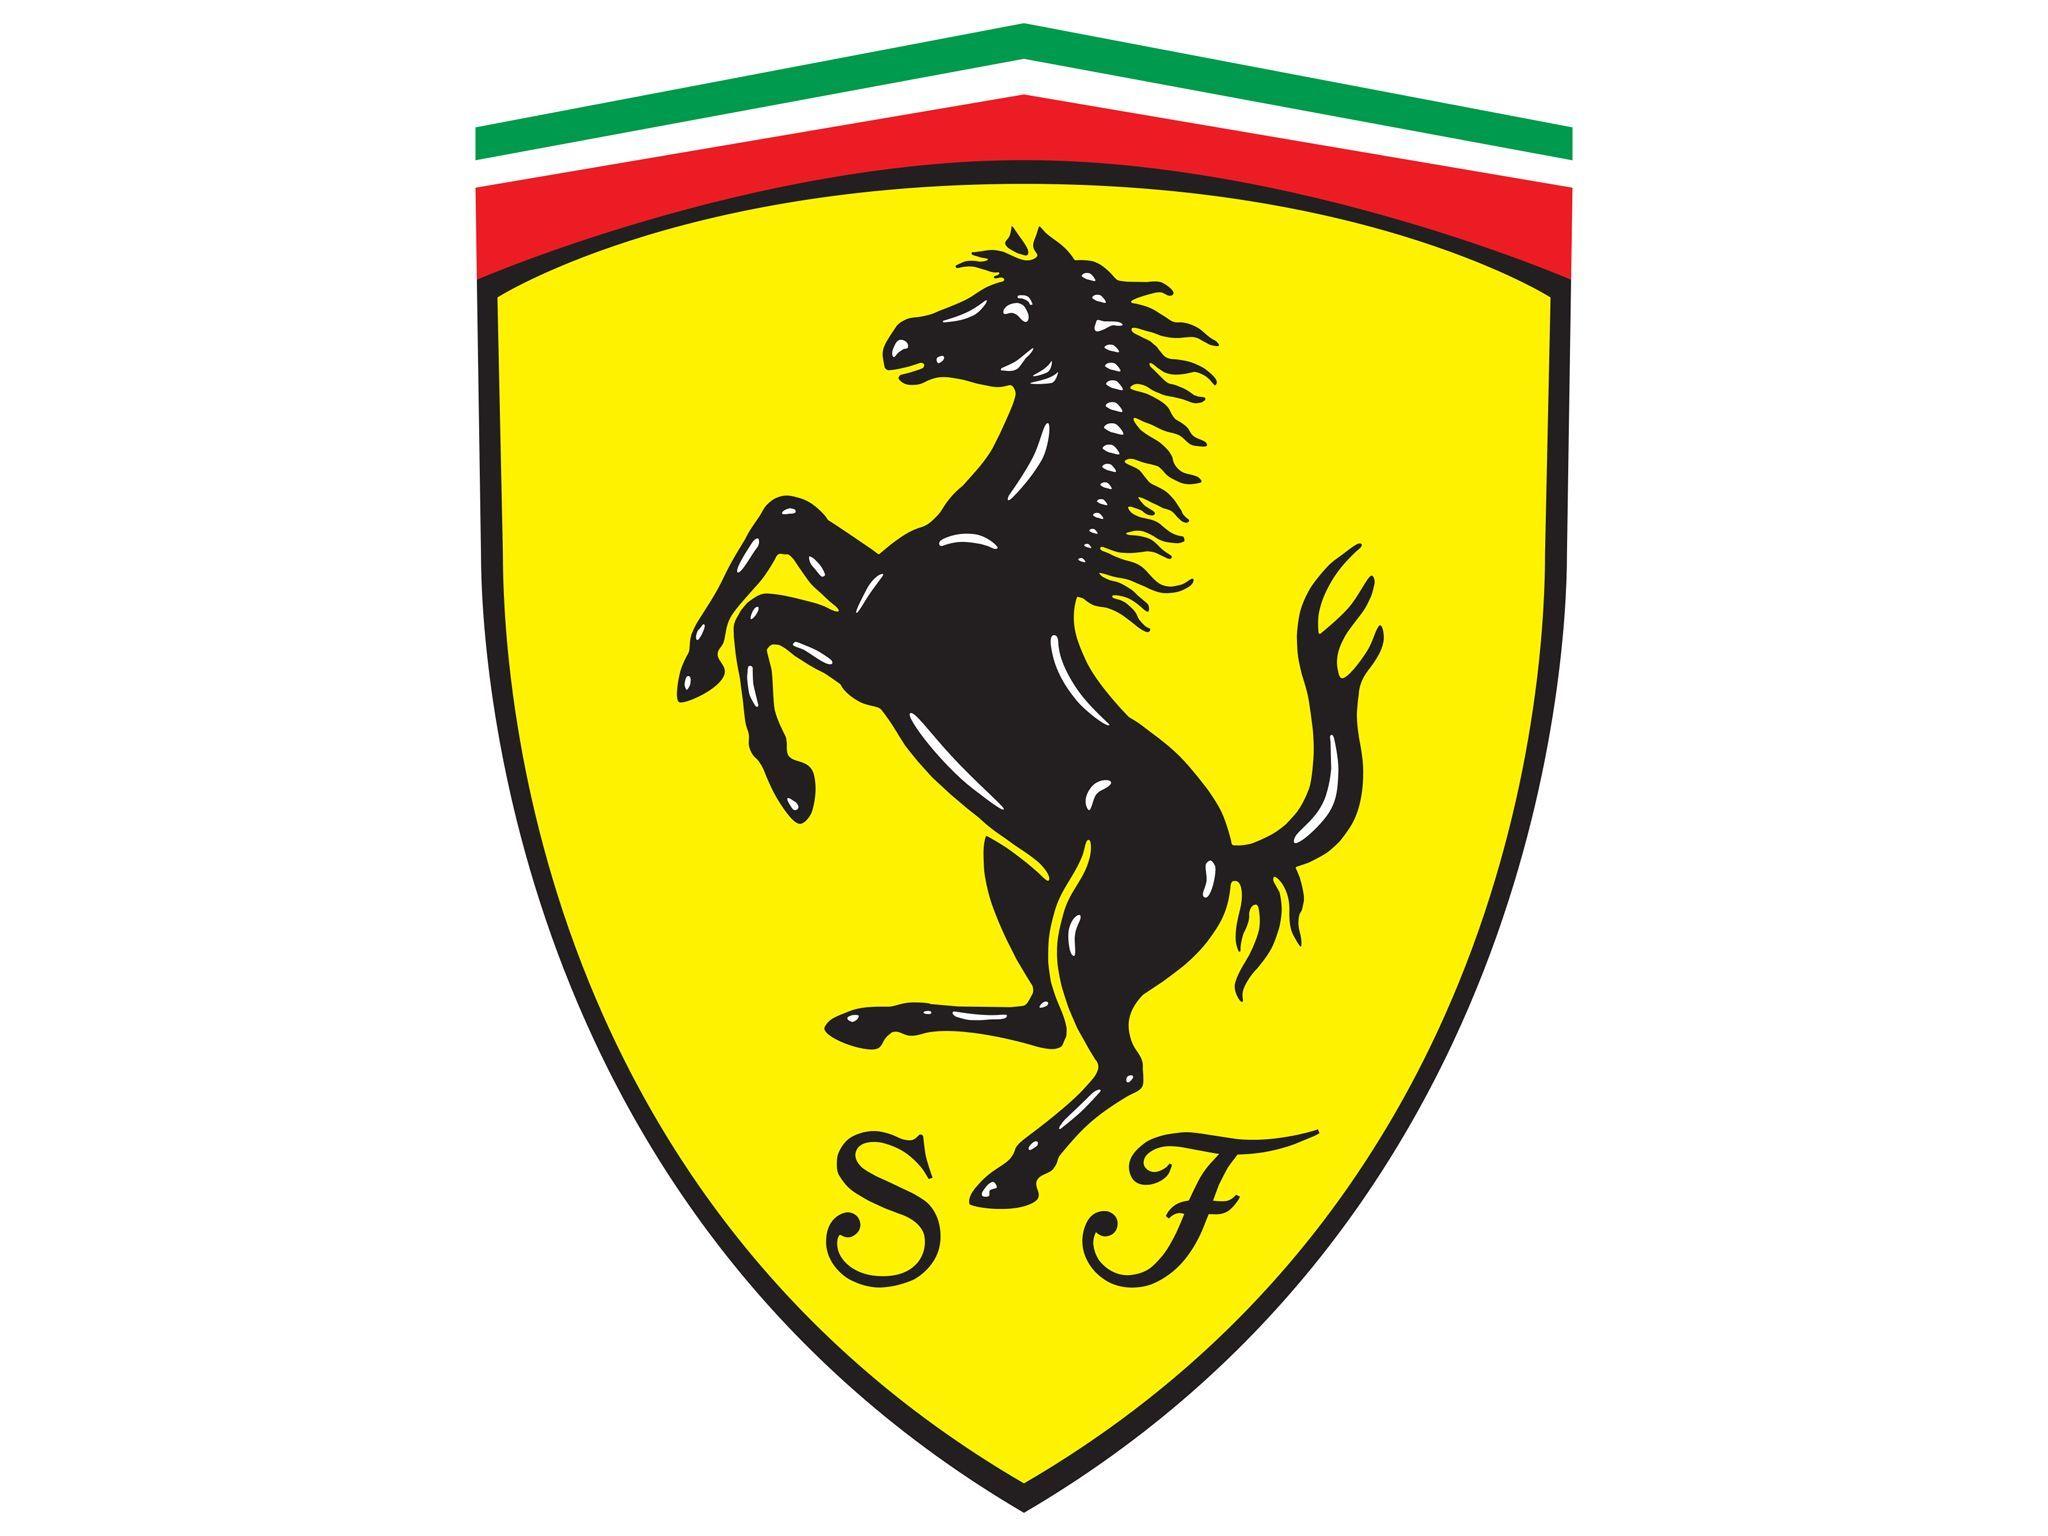 Stallion Car Logo - Ferrari Logo, Ferrari Car Symbol Meaning and History | Car Brand ...